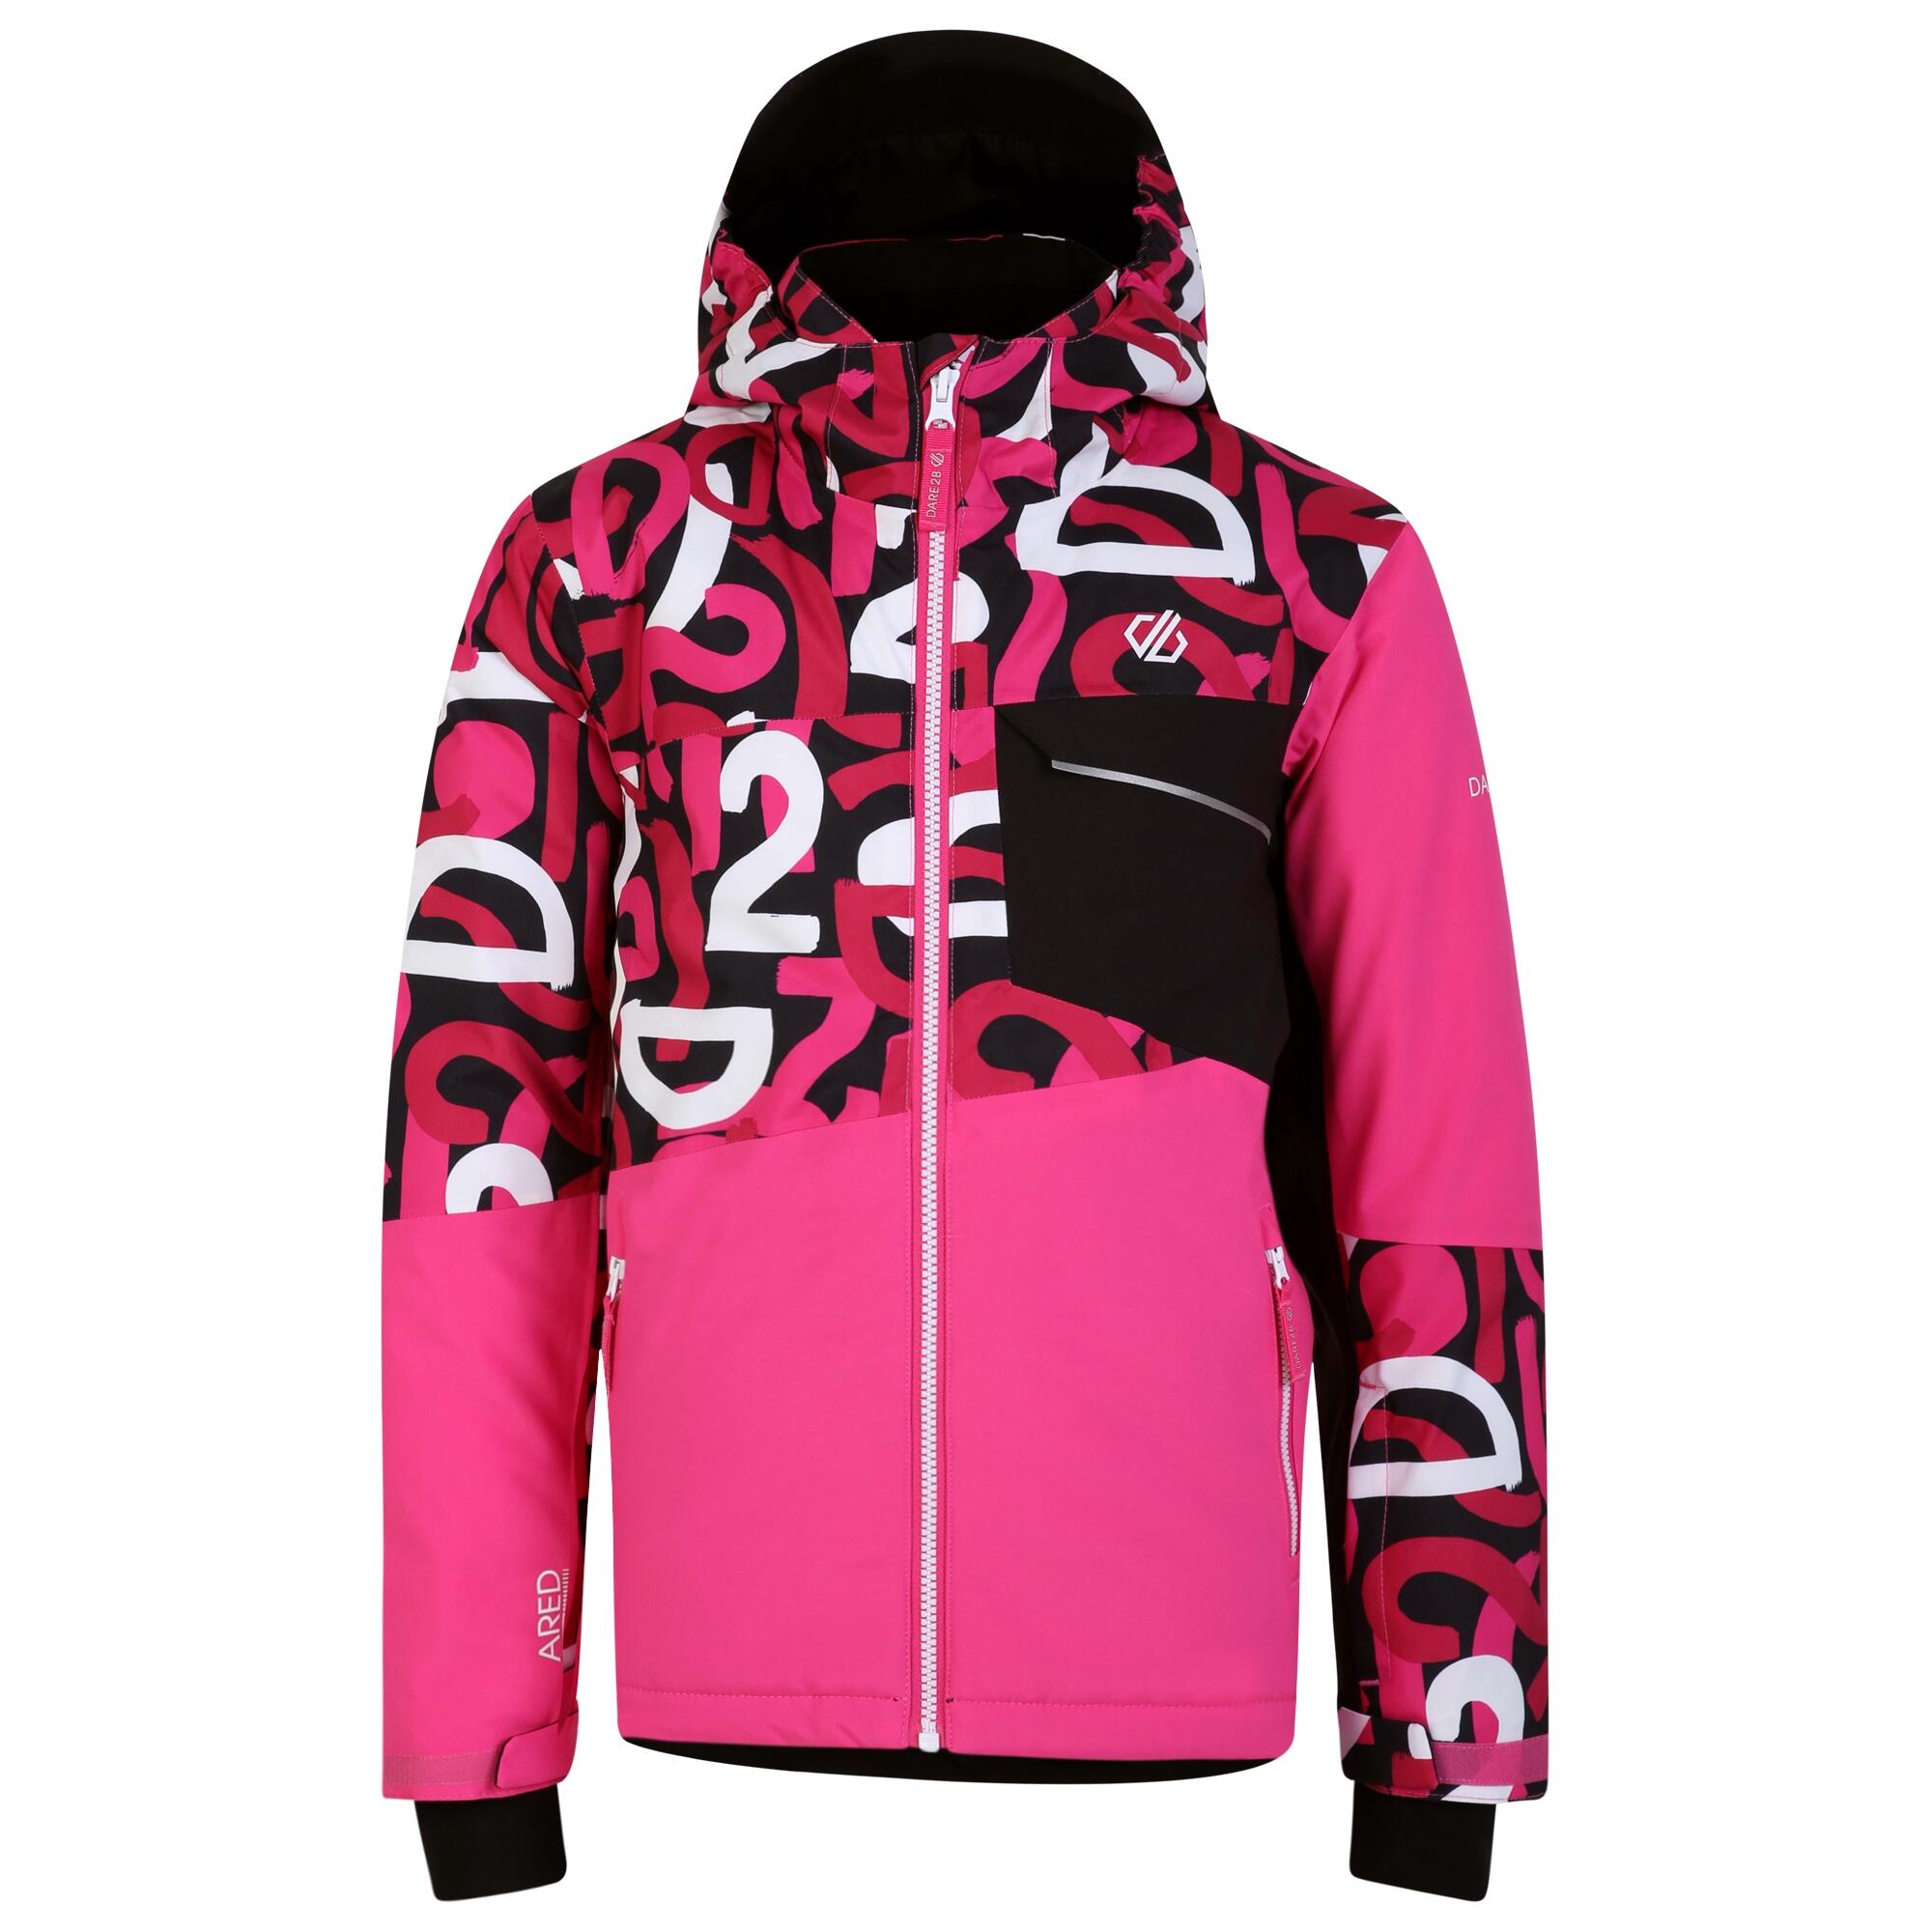 Childrens/Kids Traverse Graffiti Ski Jacket (Pink/Black) 1/4